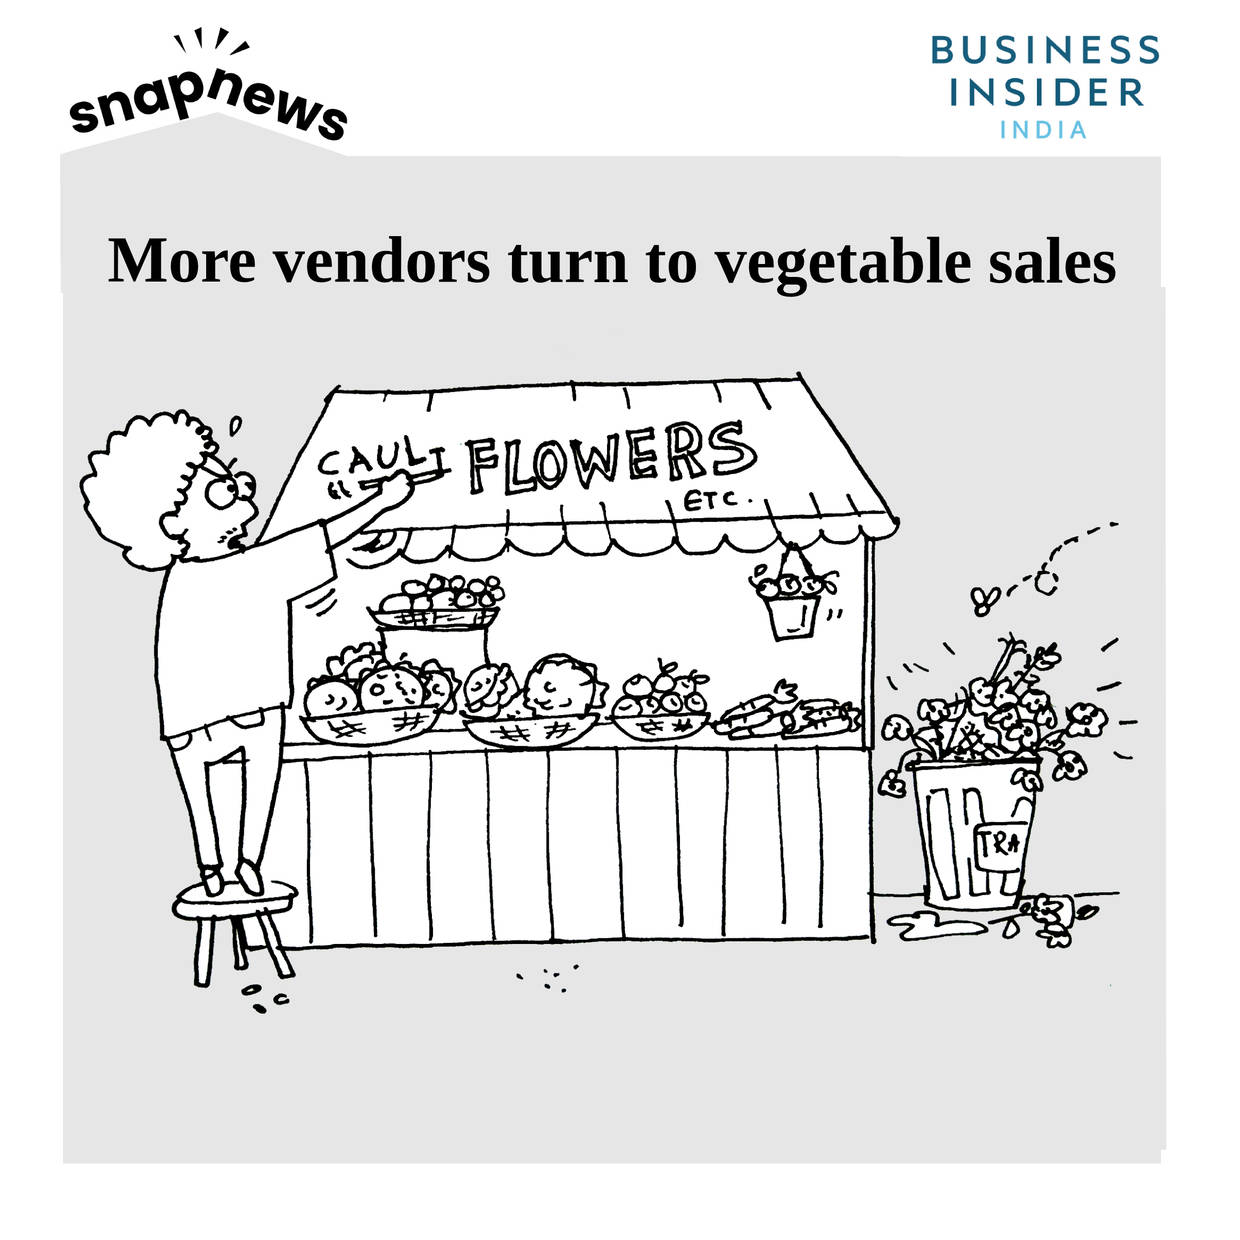 Delhi's chaat and panipuri vendors have started selling vegetables amidst coronavirus lockdown